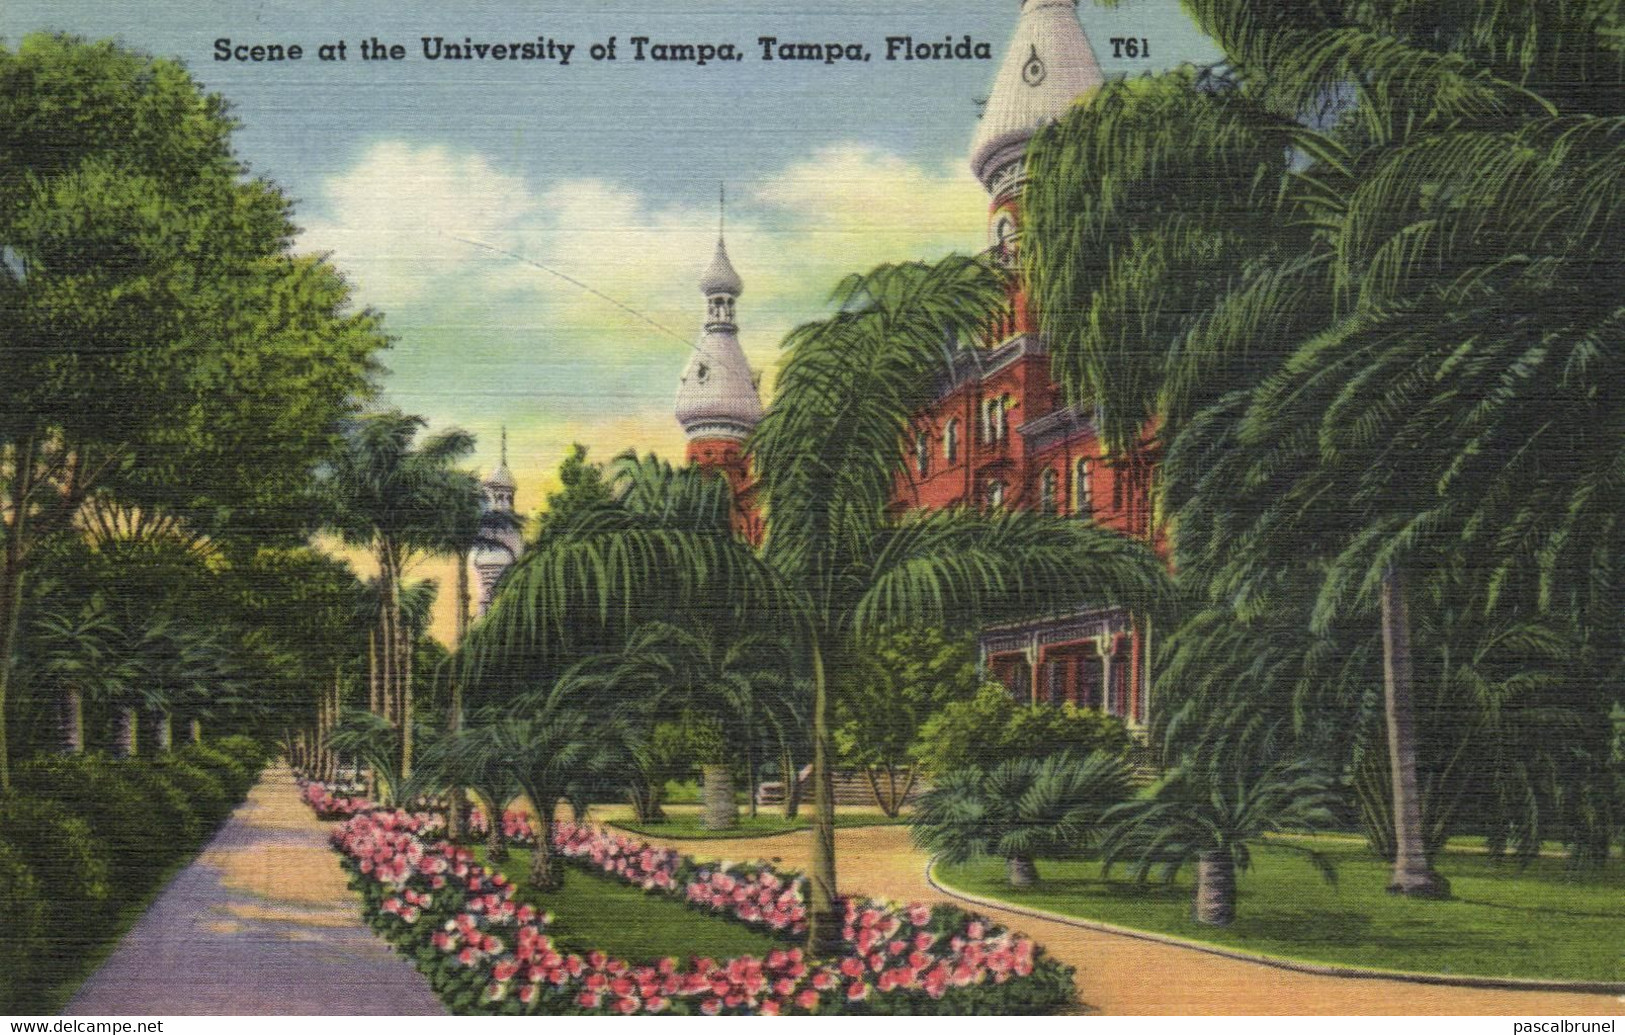 TAMPA - SCENE AT THE UNIVERSITY OF TAMPA - Tampa